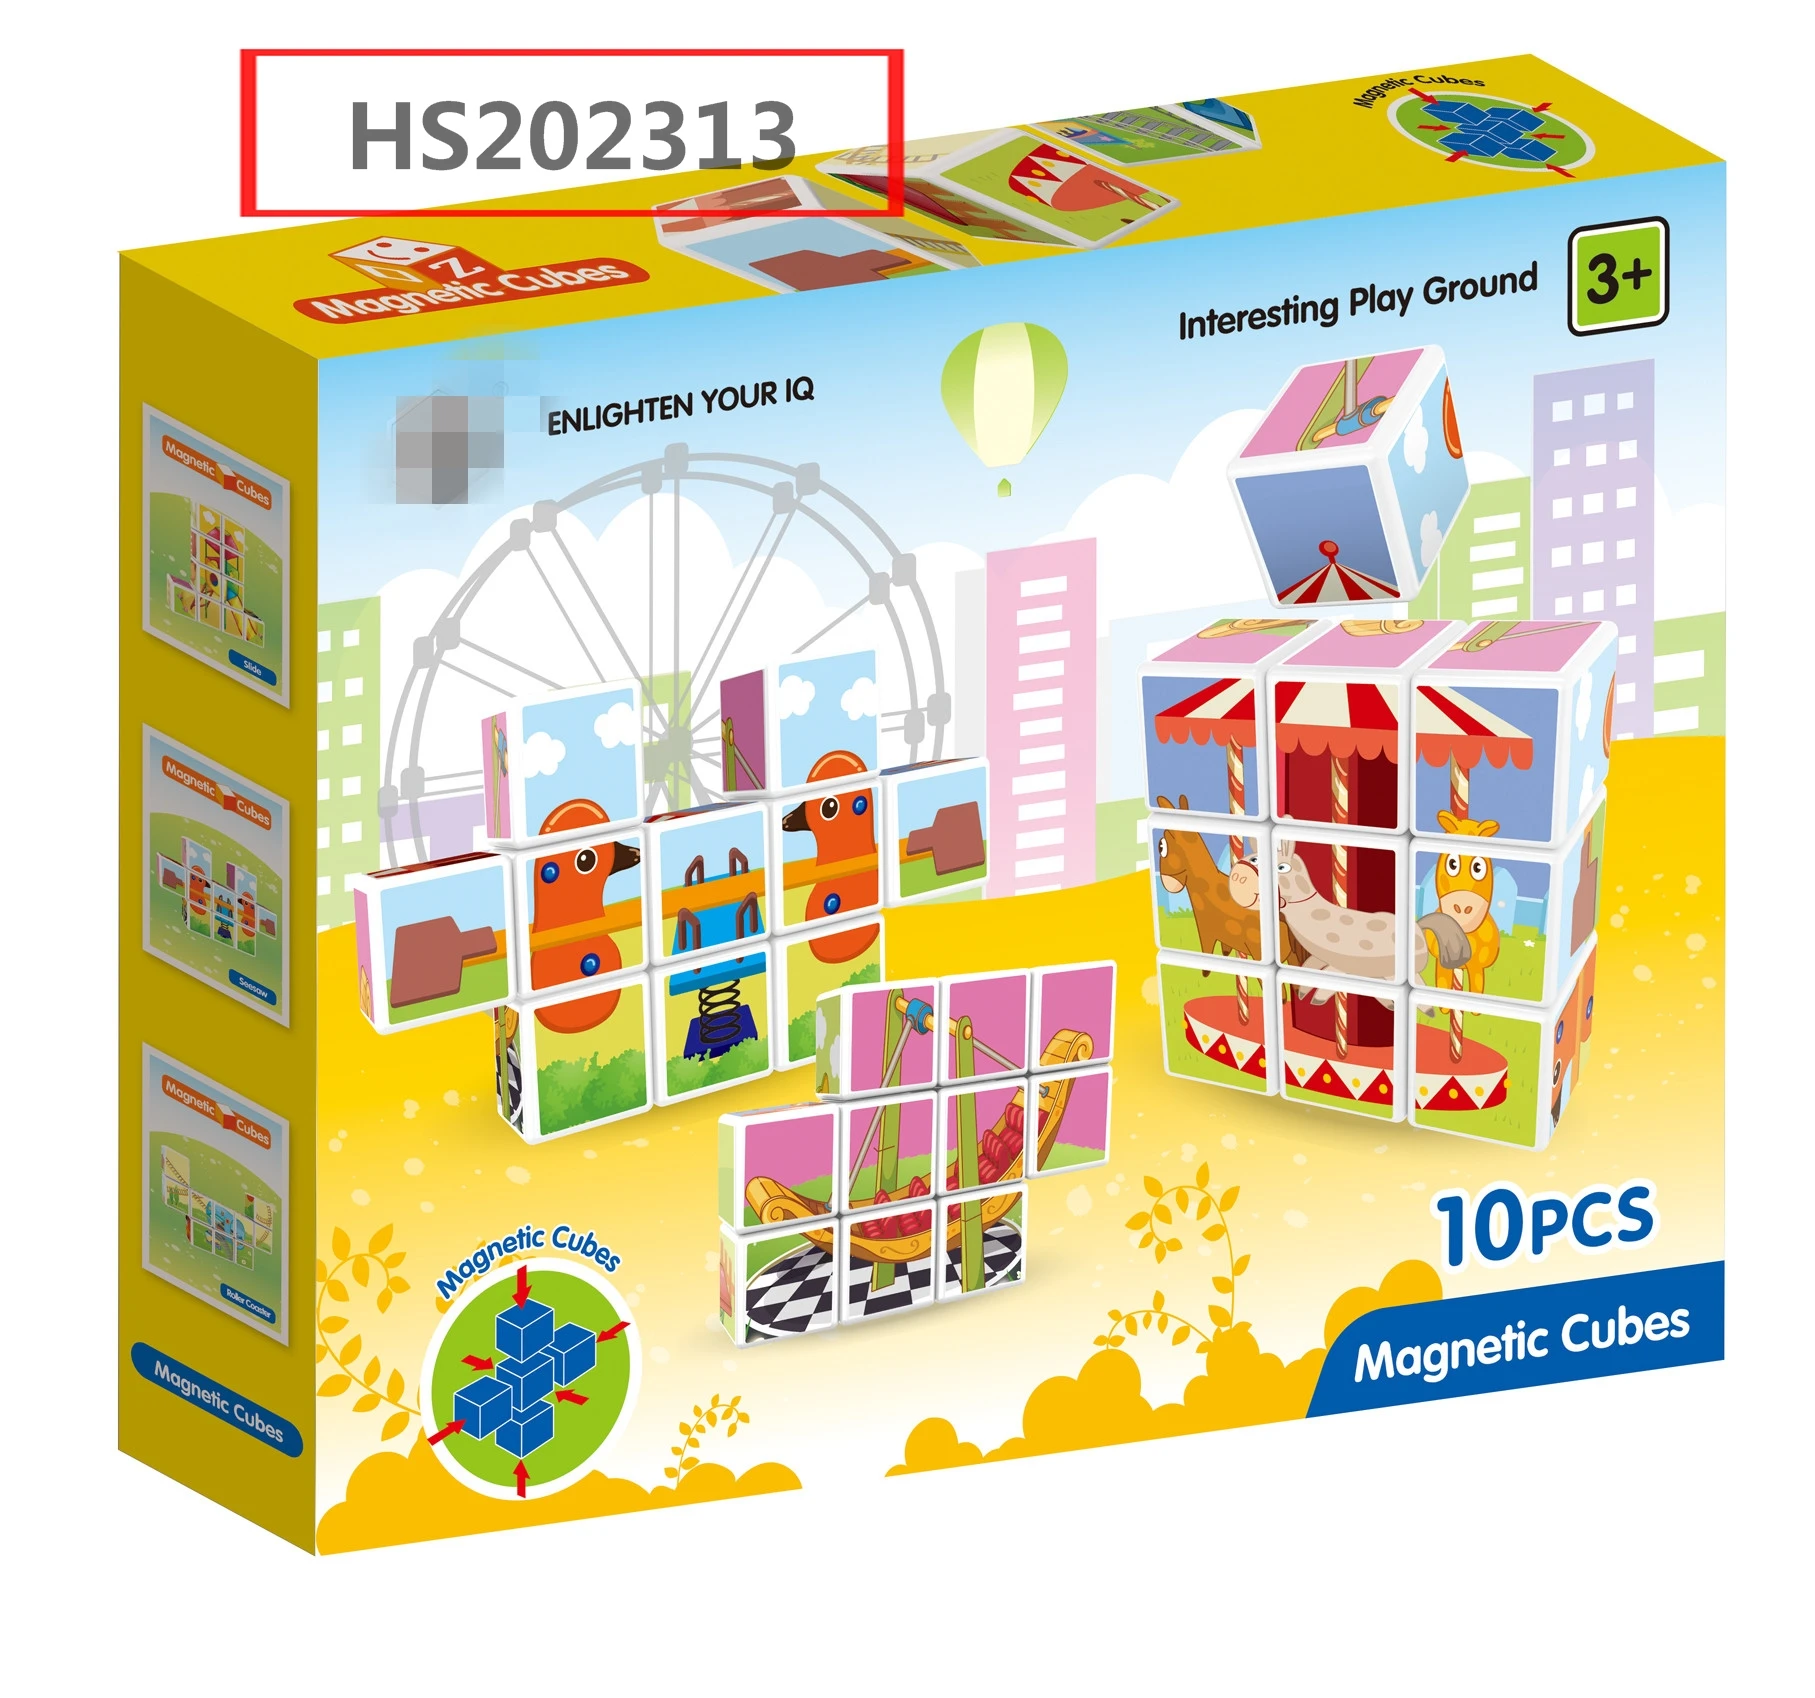 HS202313, Huwsin Toys, Magnetic magic cube,magneticbuilding block,10pcs, Educational toy